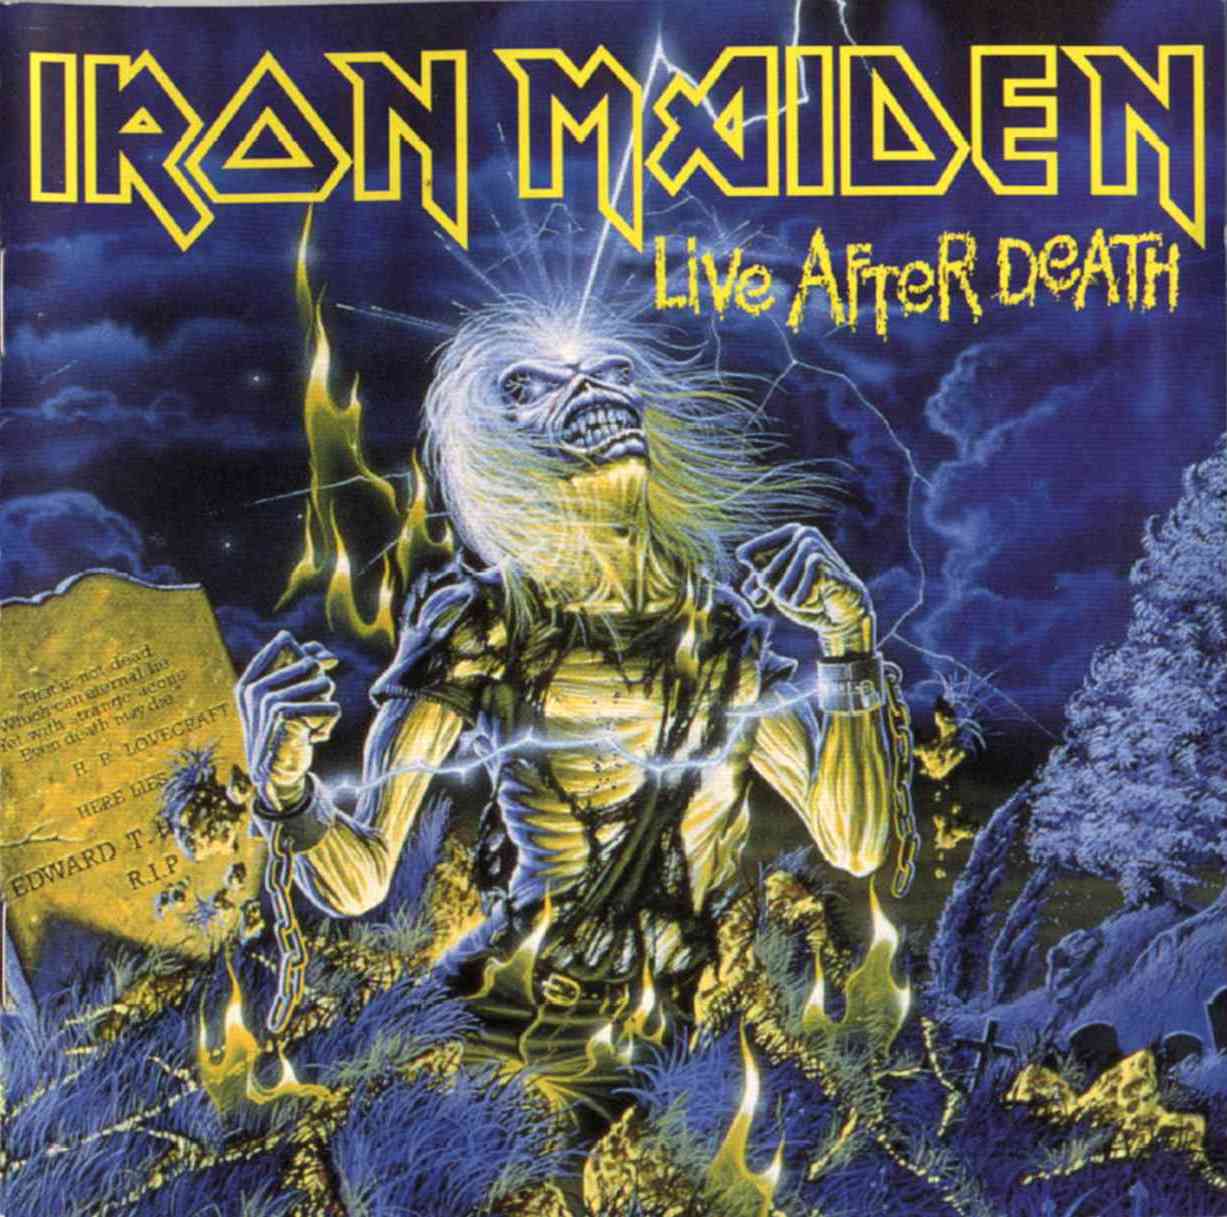 [1985-IronMaiden-LiveAfterDeath-FrontLarge.jpg]